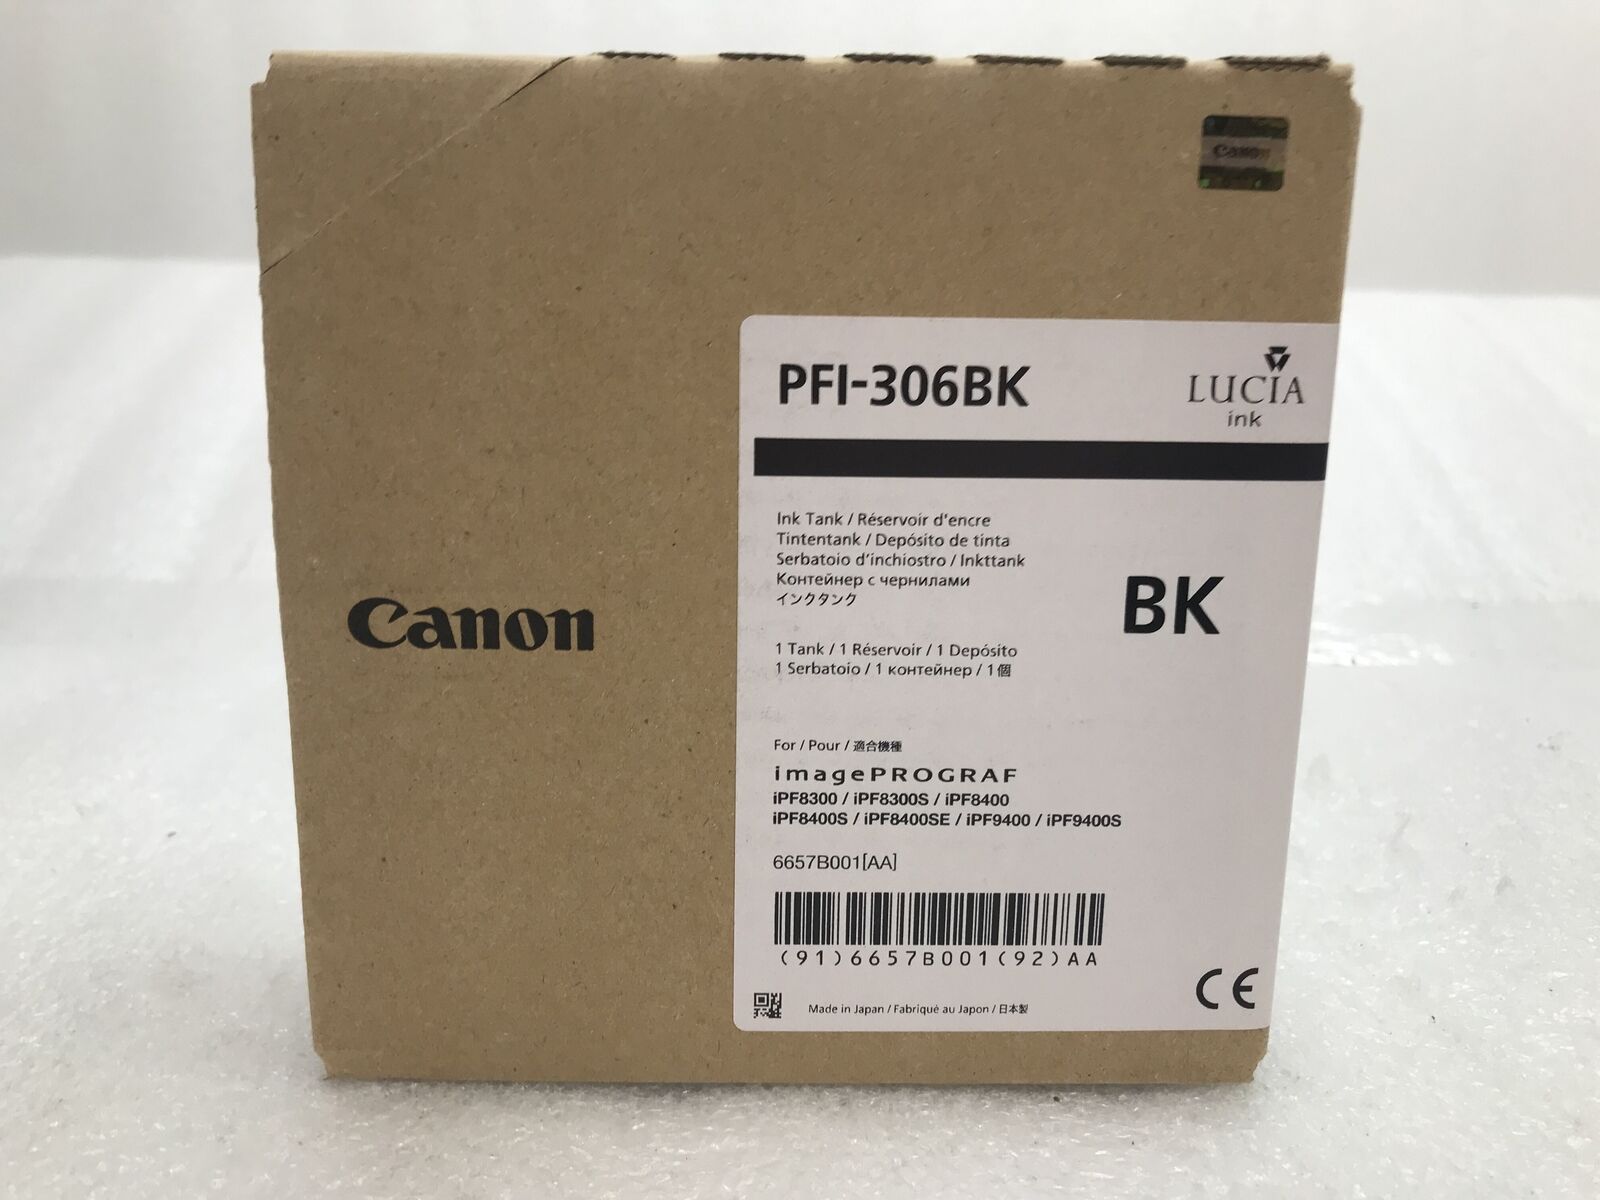 Genuine Canon PFI-306BK 6657B001 Black Ink Cartridge iPF8300 iPF8400 EXP 2019